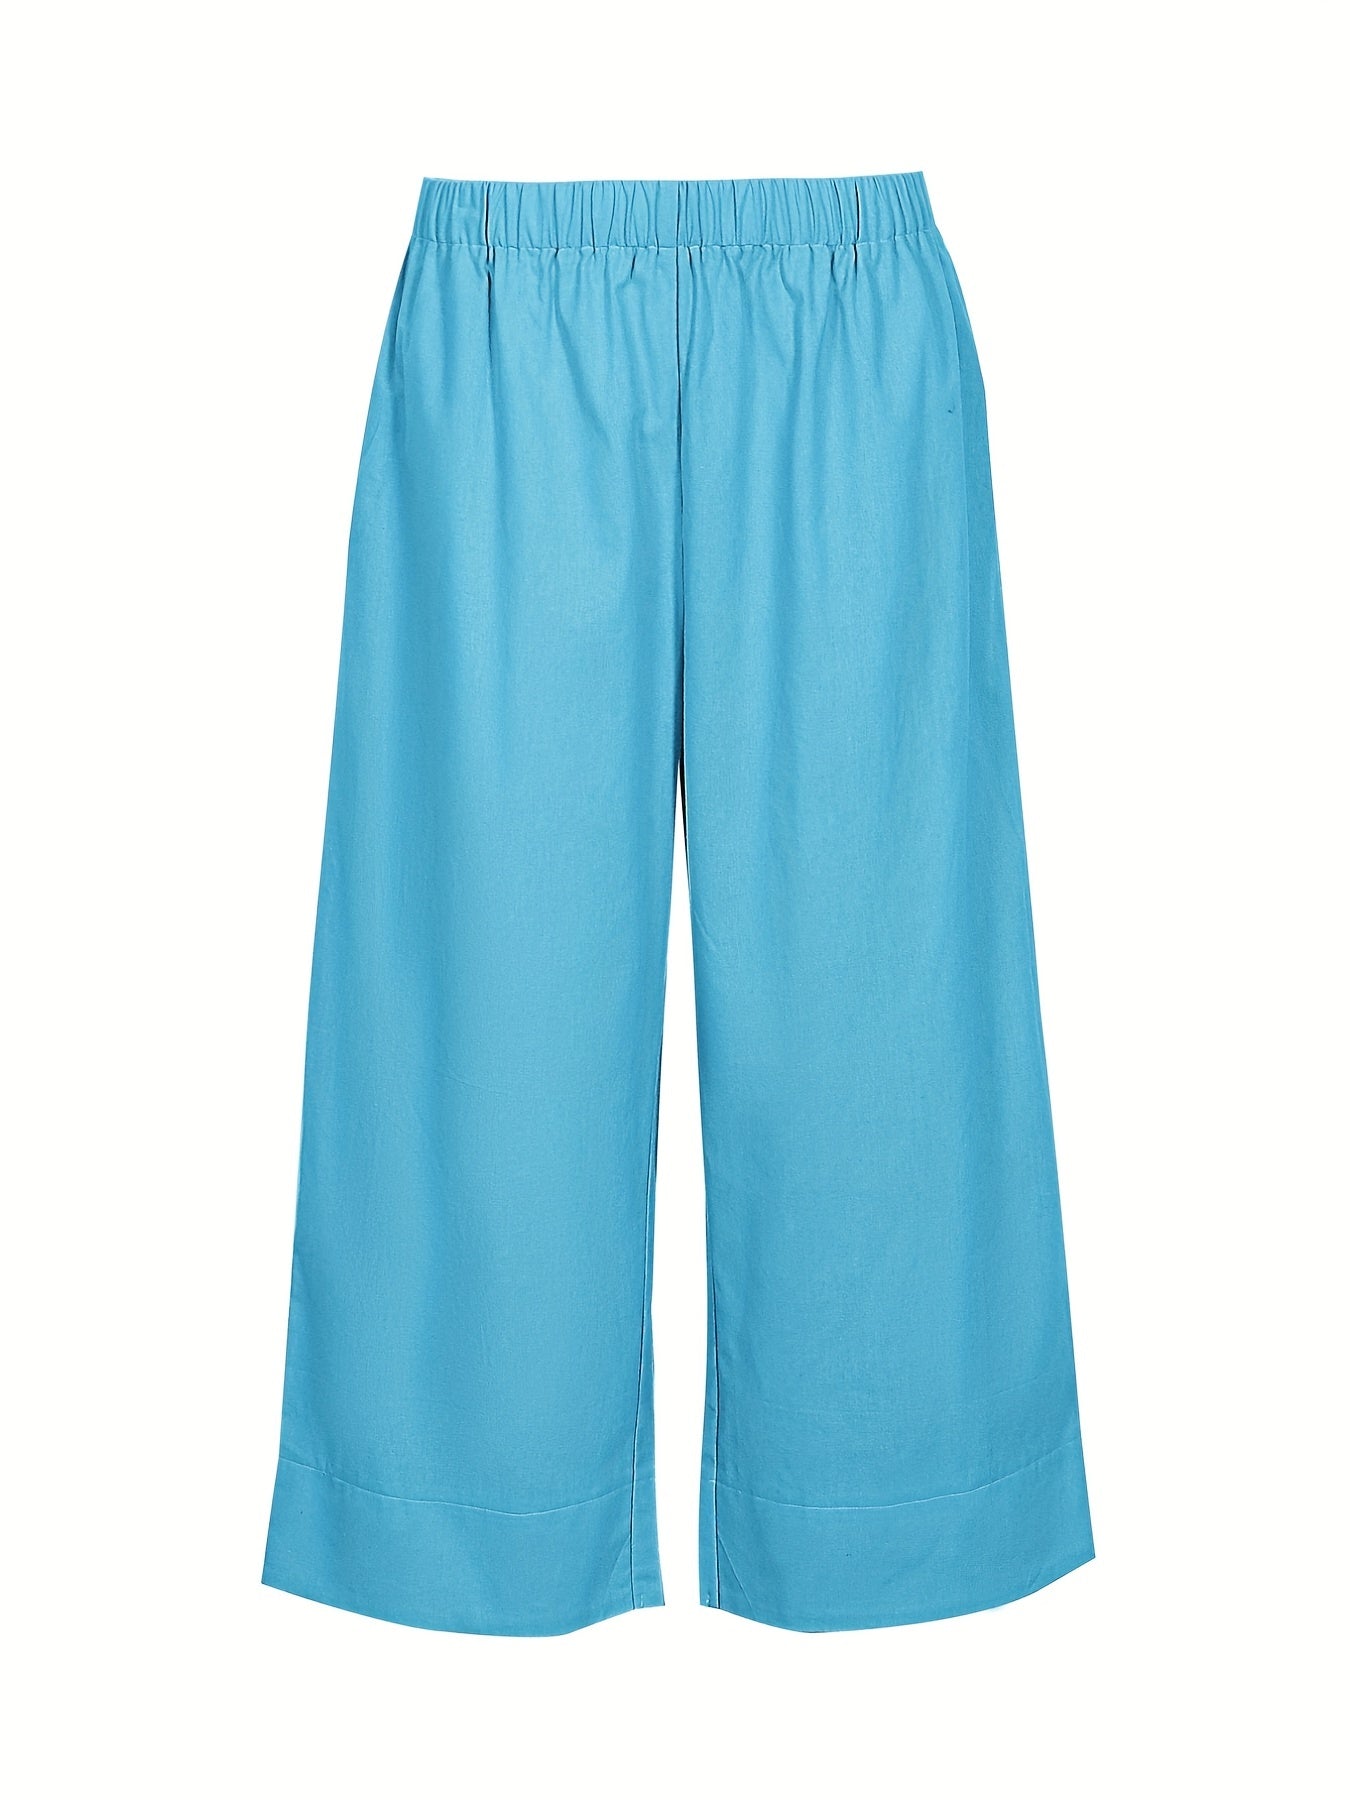 Plus Size Casual Capri Pants, Women's Plus Solid Straight Leg Summer Capri Pants